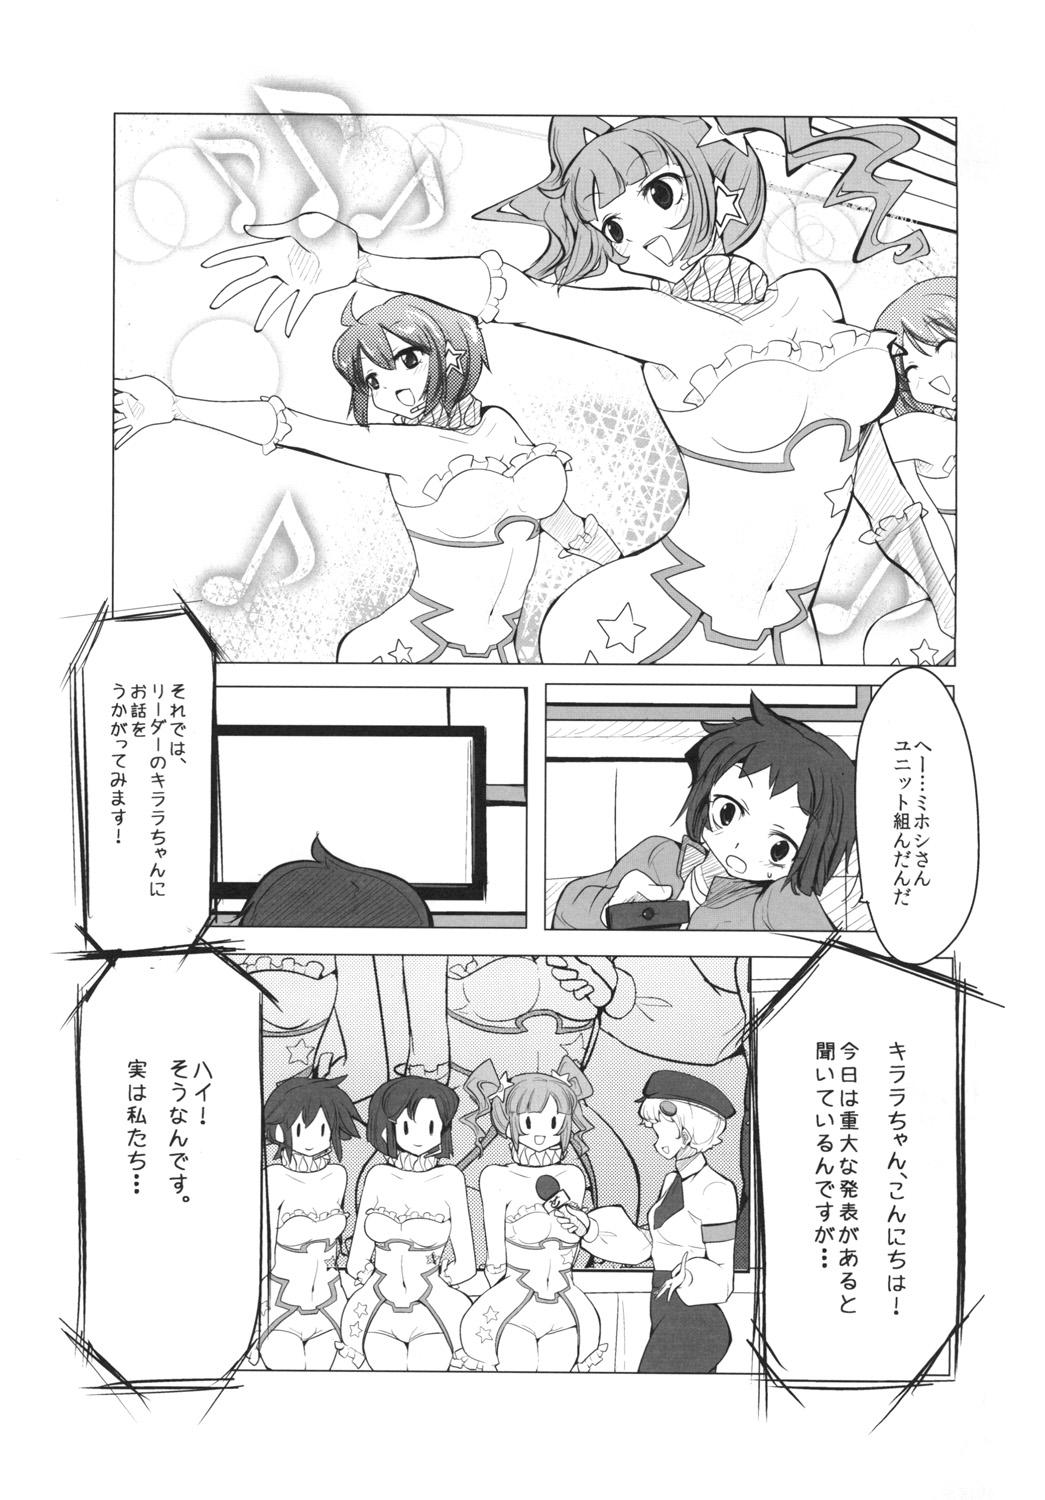 Cavalgando Idol Unit ☆ Kirara - Gundam build fighters Porn - Page 2